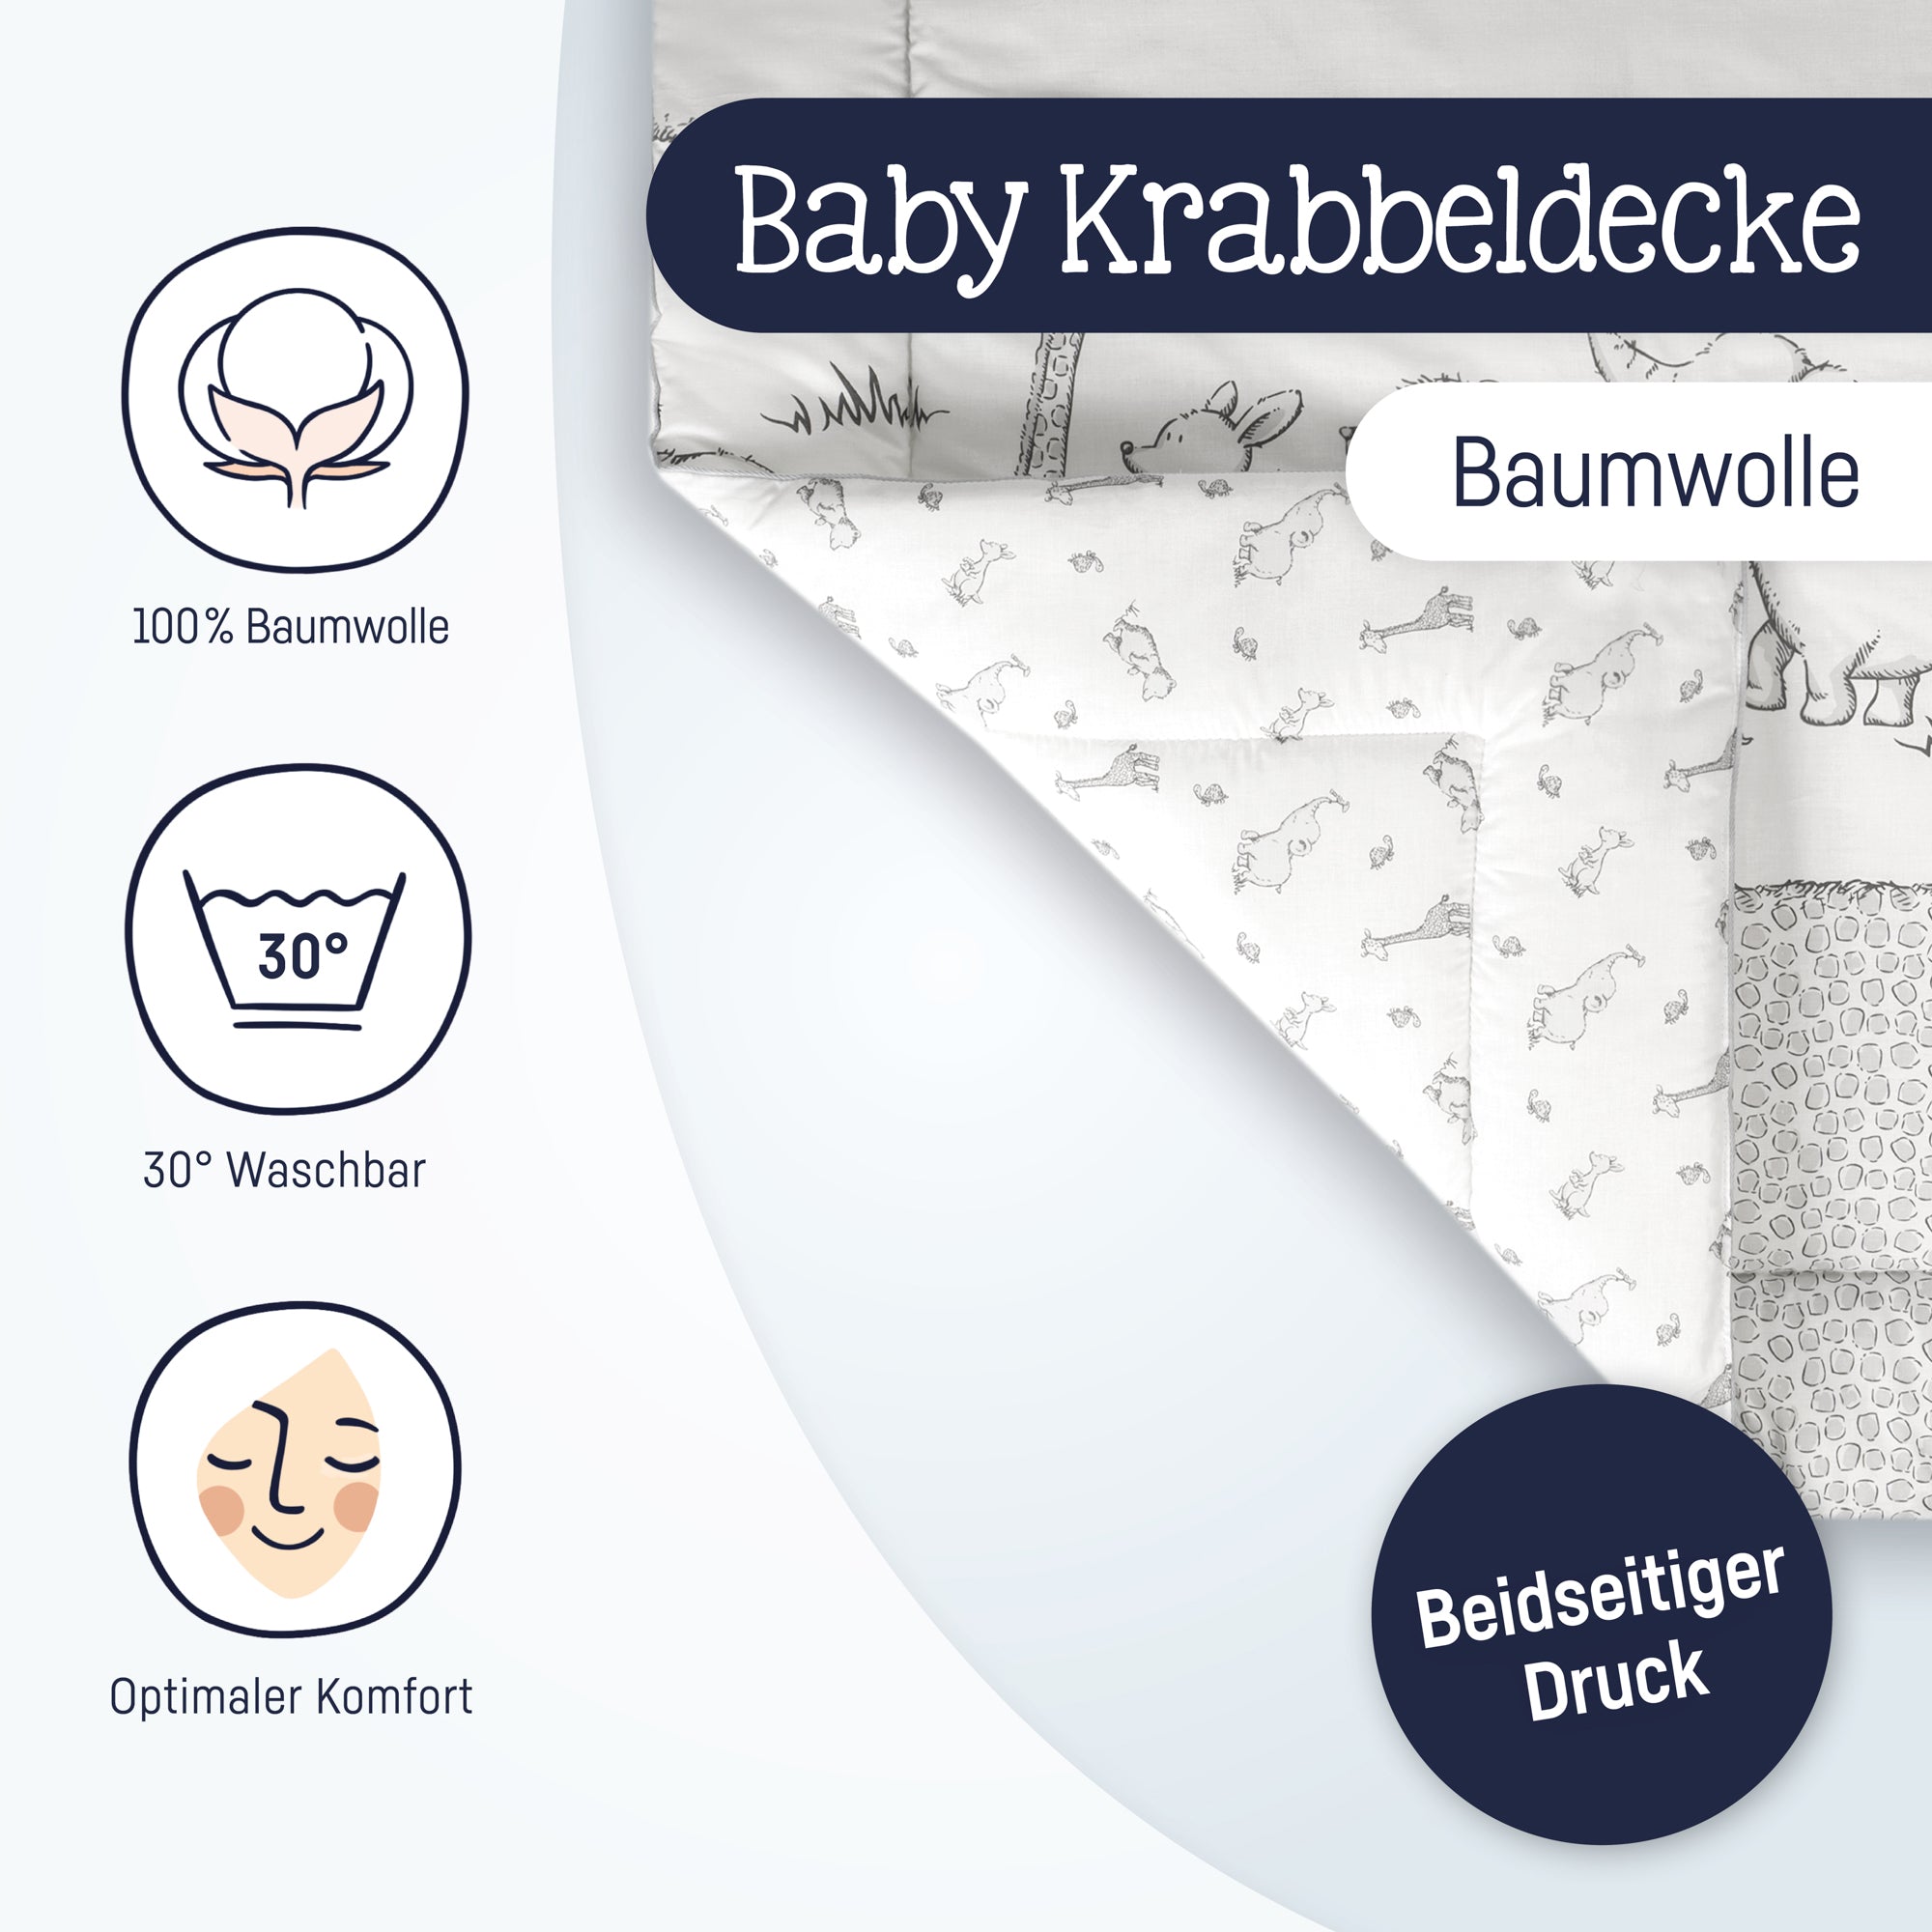 Krabbeldecke, GmbH – Julius Co Safari & KG Zöllner